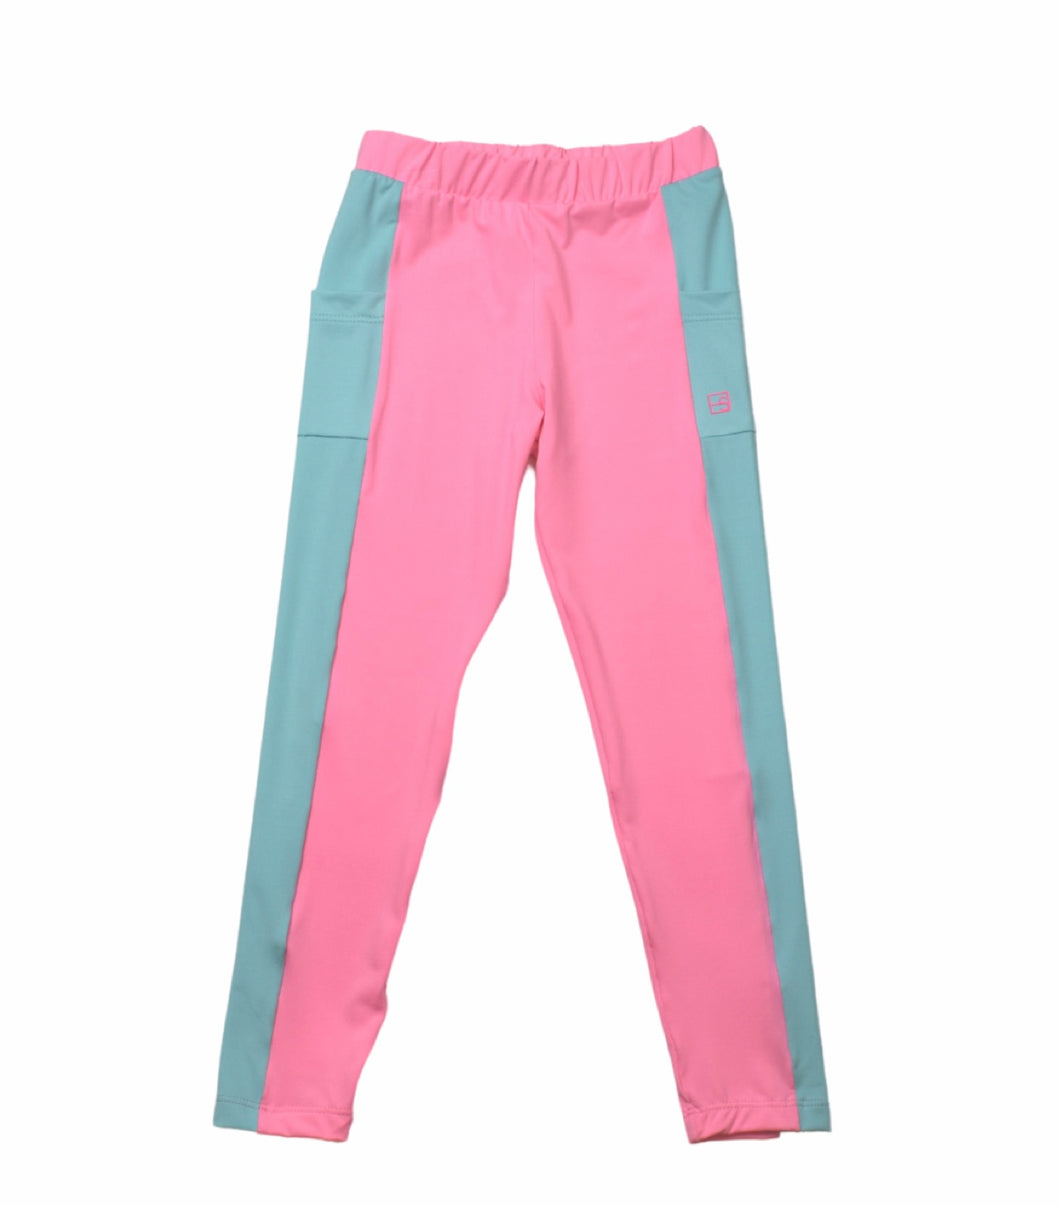 Lila Legging - Pink Athleisure / Turquoise Sides